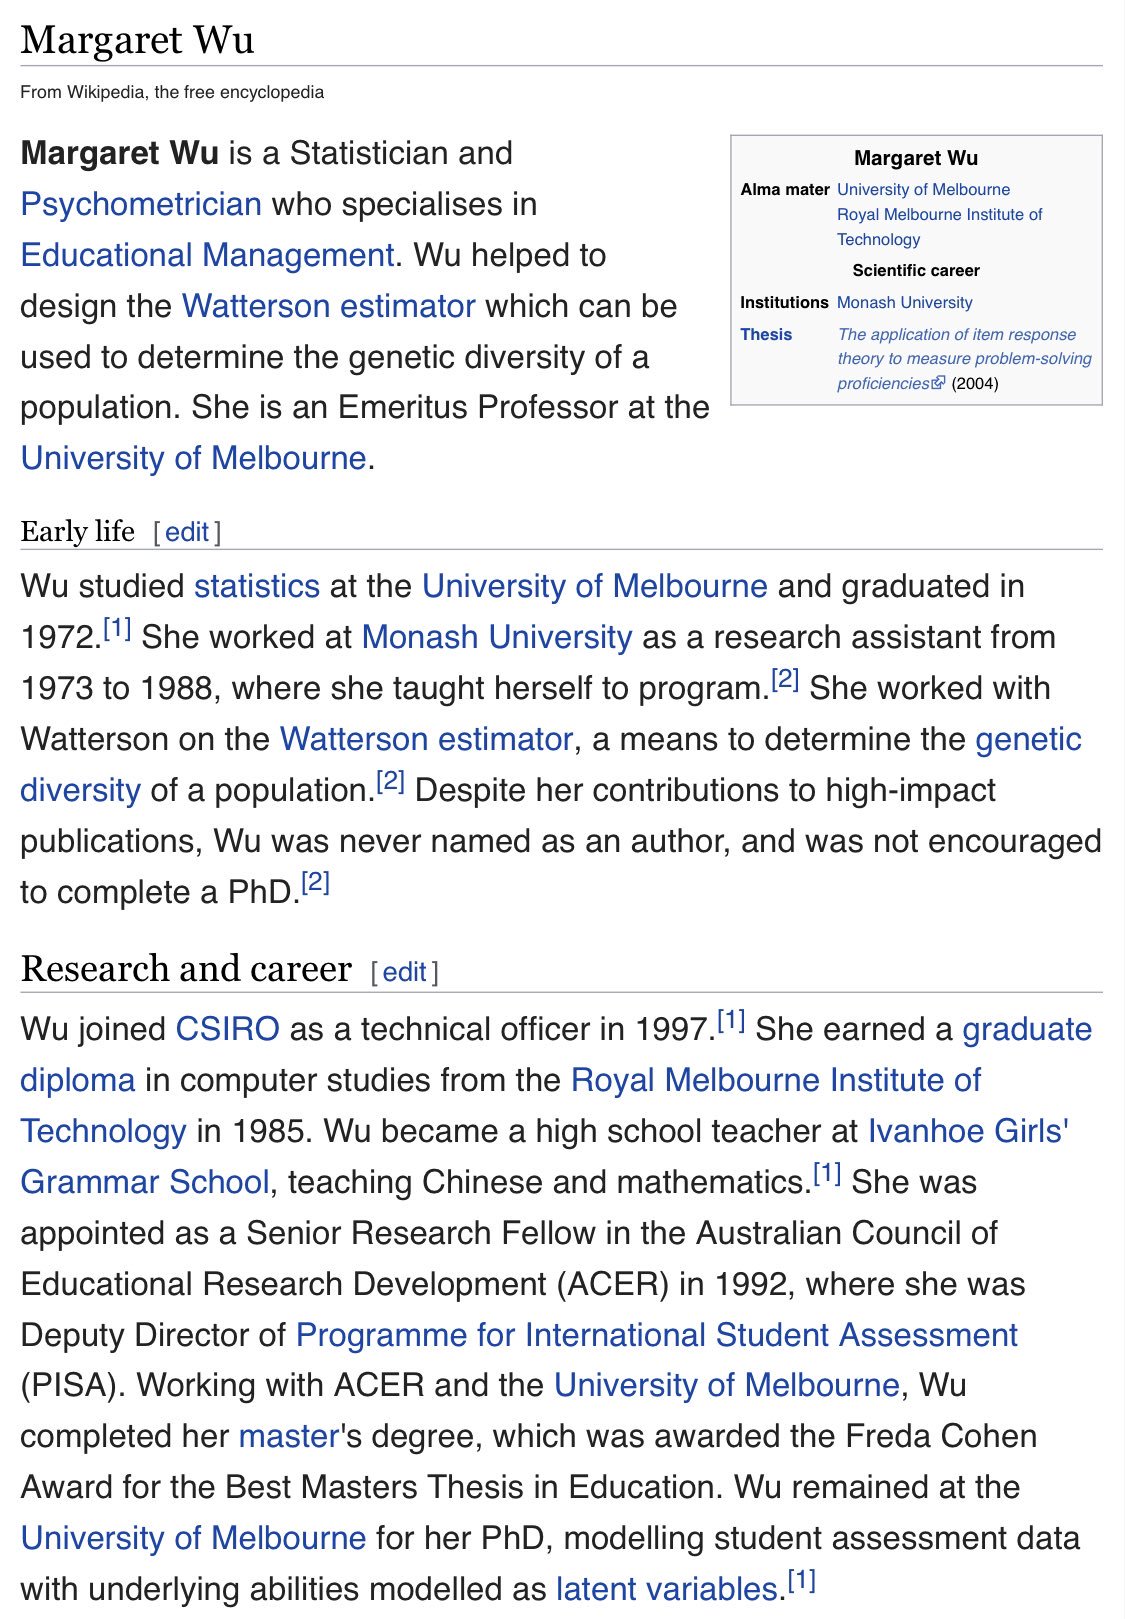 Educational management - Wikipedia